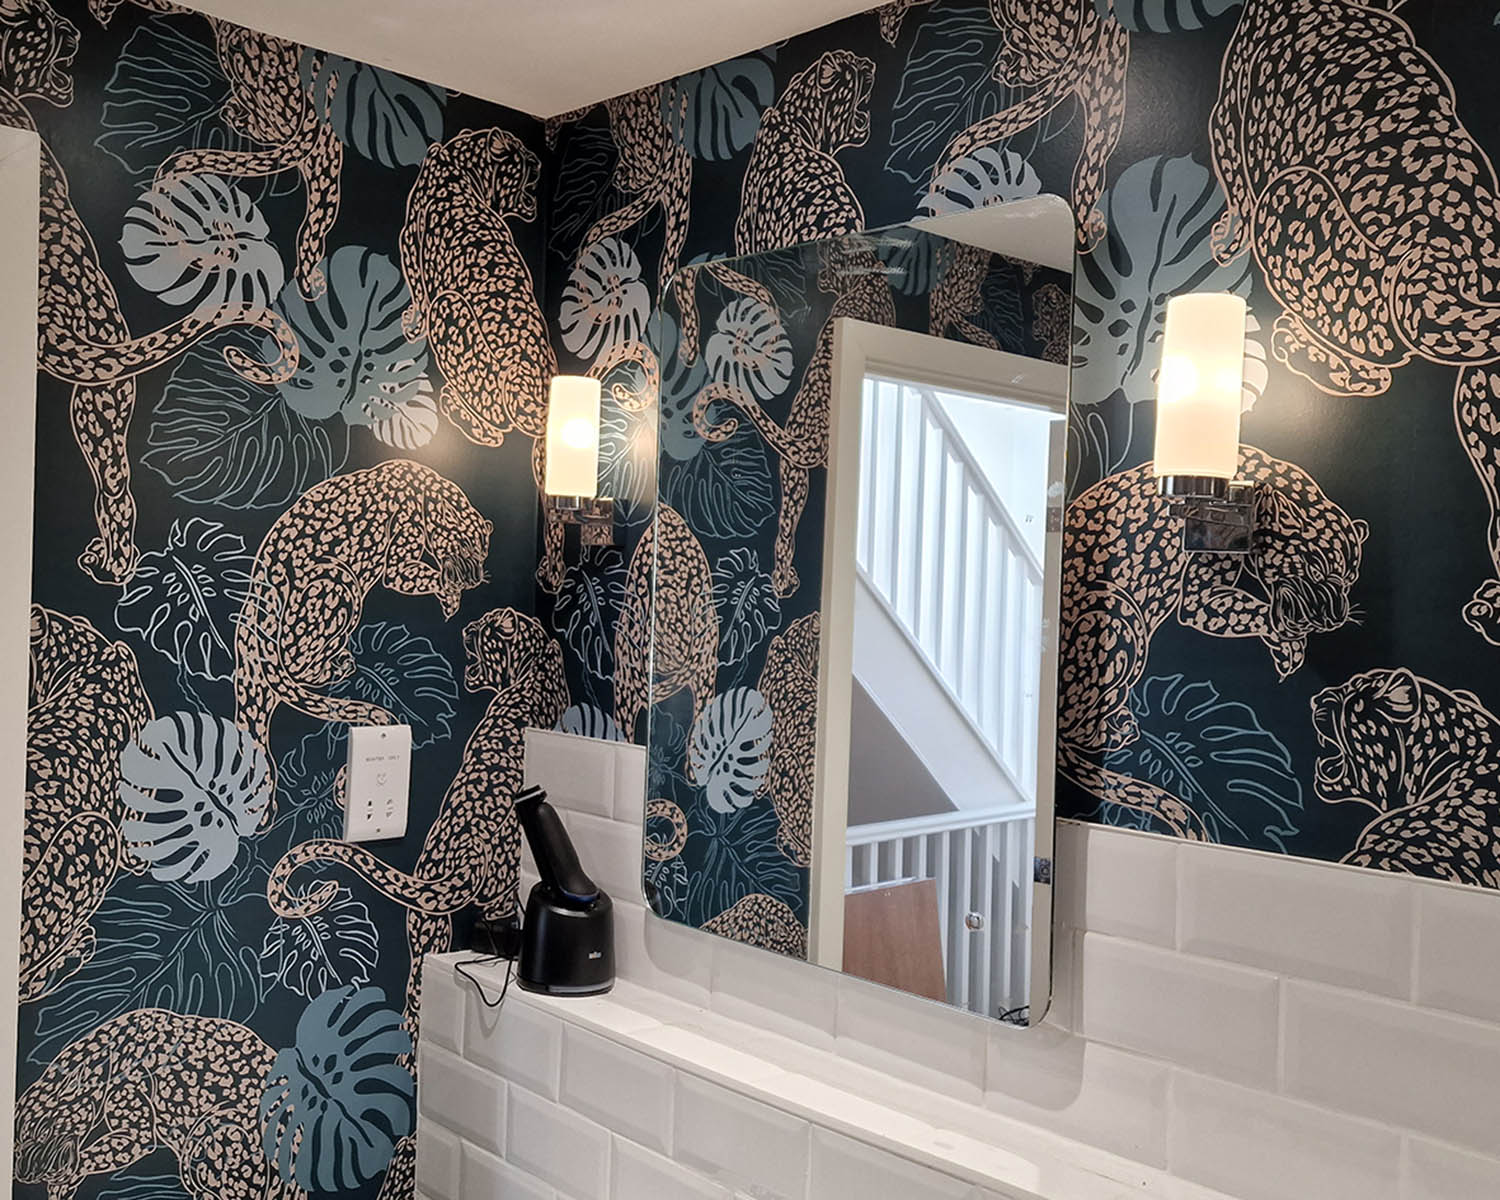 Leopard Art Deco wallpaper installation in bathroom.